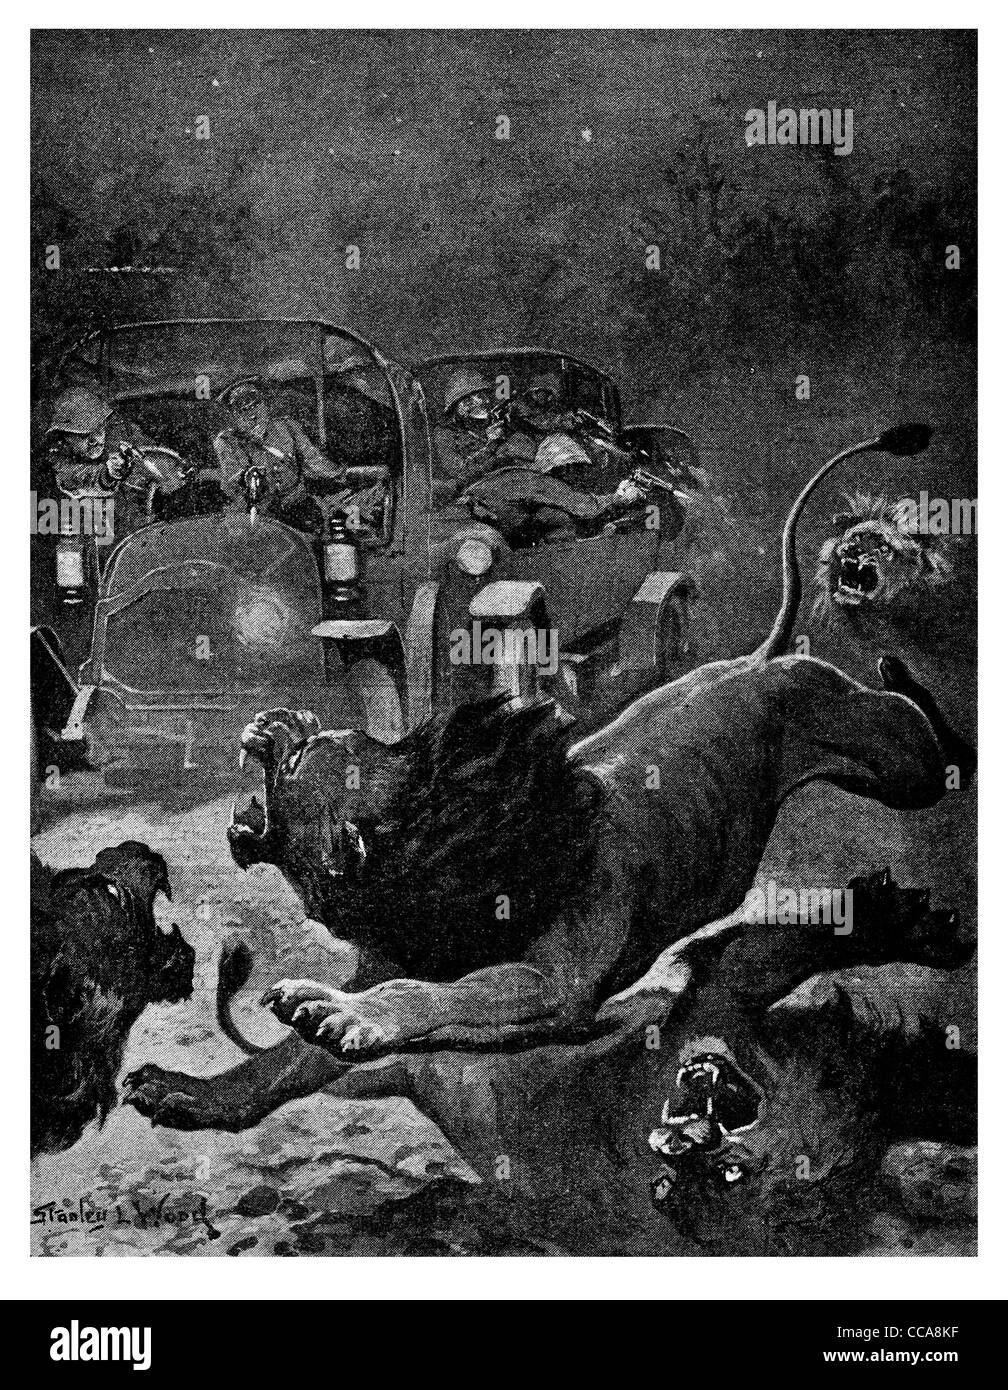 1916 East Africa attacking wild Lion Kilimanjaro Africa vehicle crash hunting hunt predator prey hunter beast king jungle claw Stock Photo